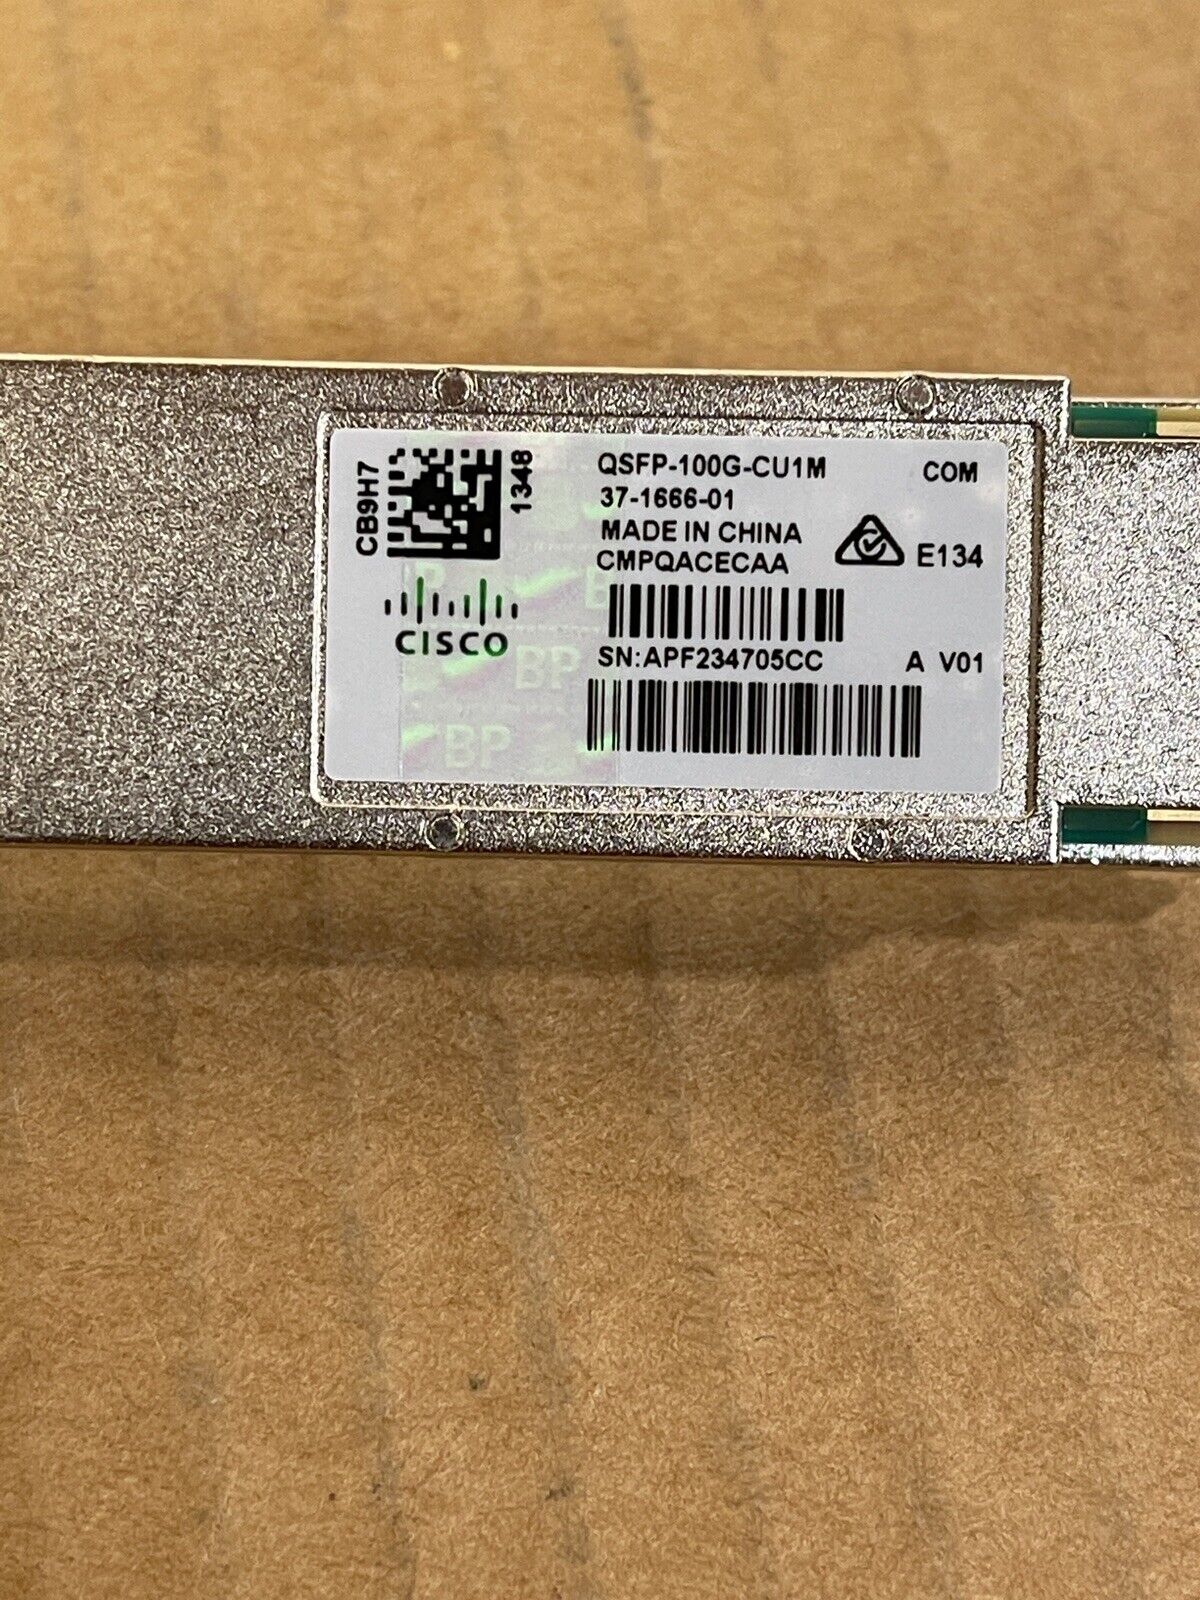 Genuine Cisco QSFP-100G-CU1M 100GBASE-CR4 Passive Copper 1M Direct Attach Cable.